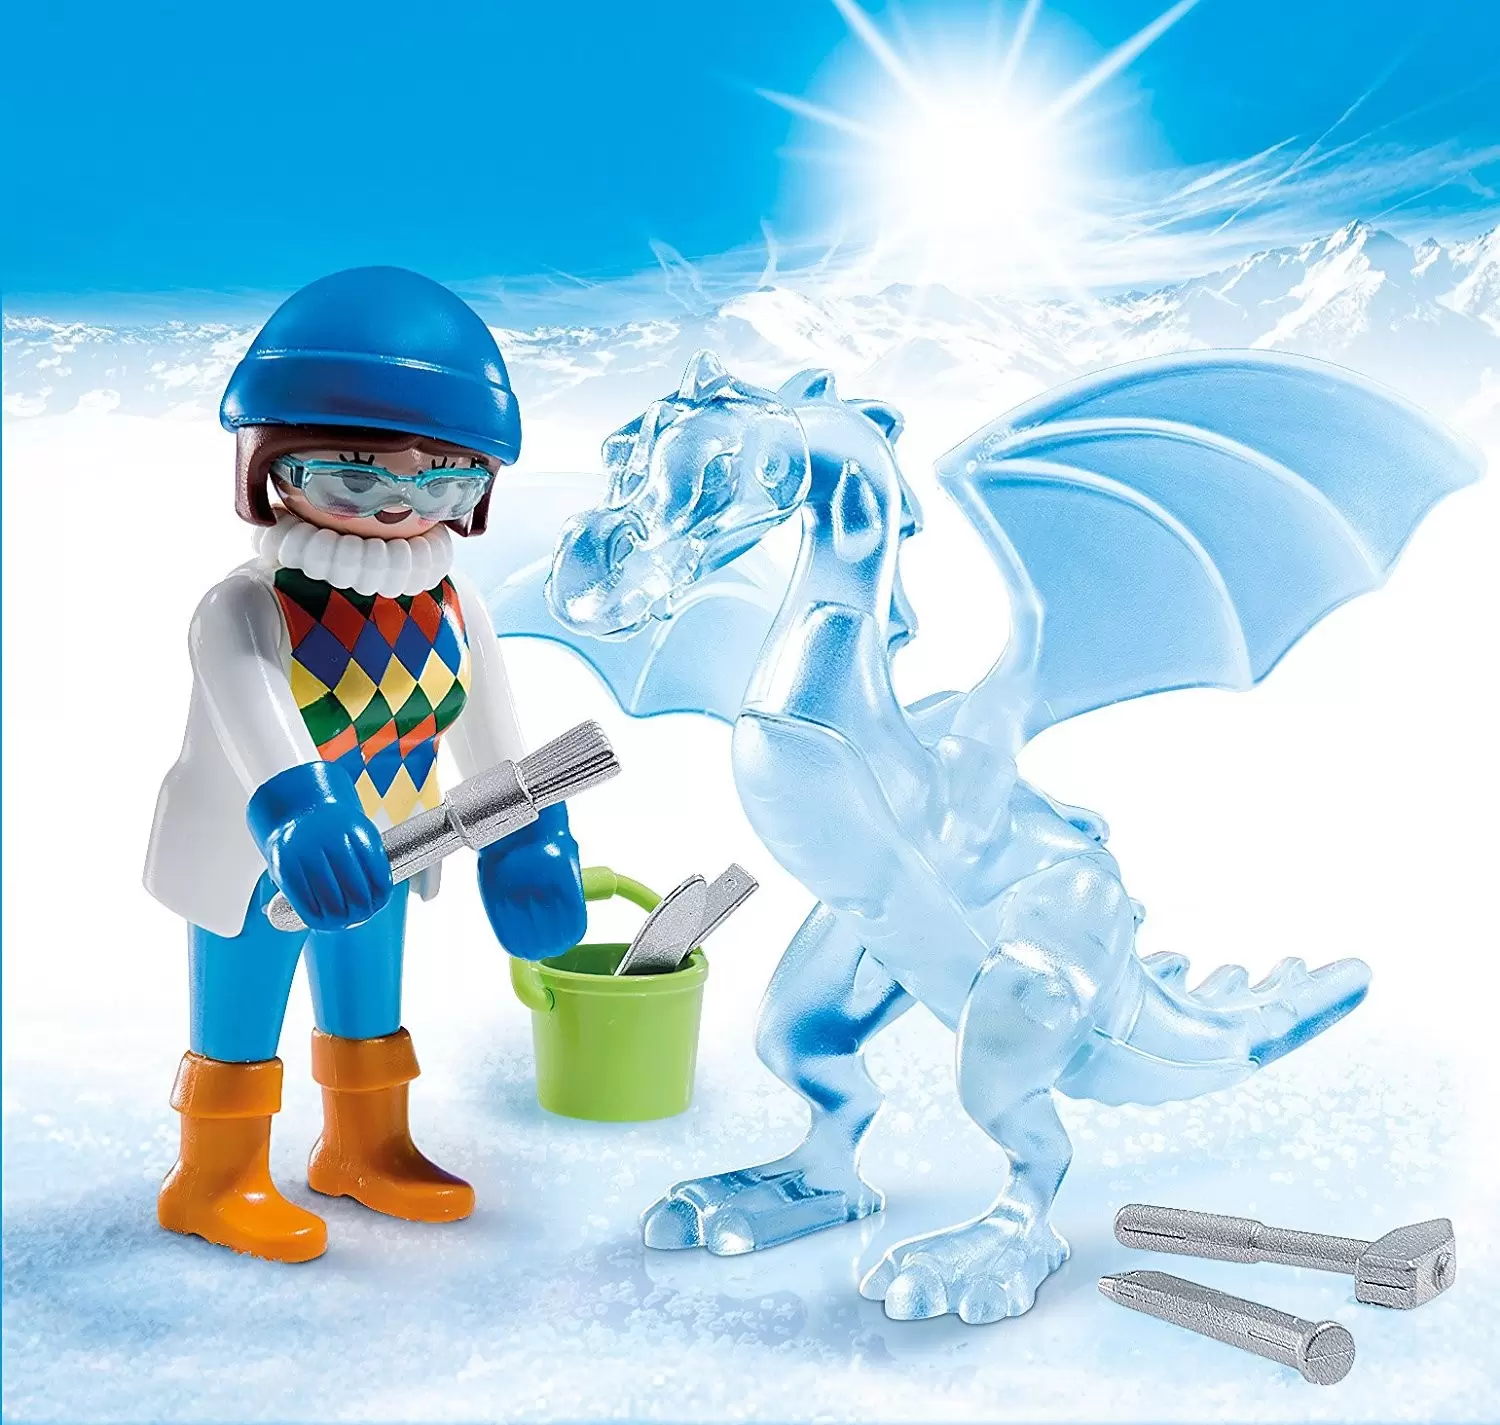 Playmobil SpecialPlus - Ice Sculptor